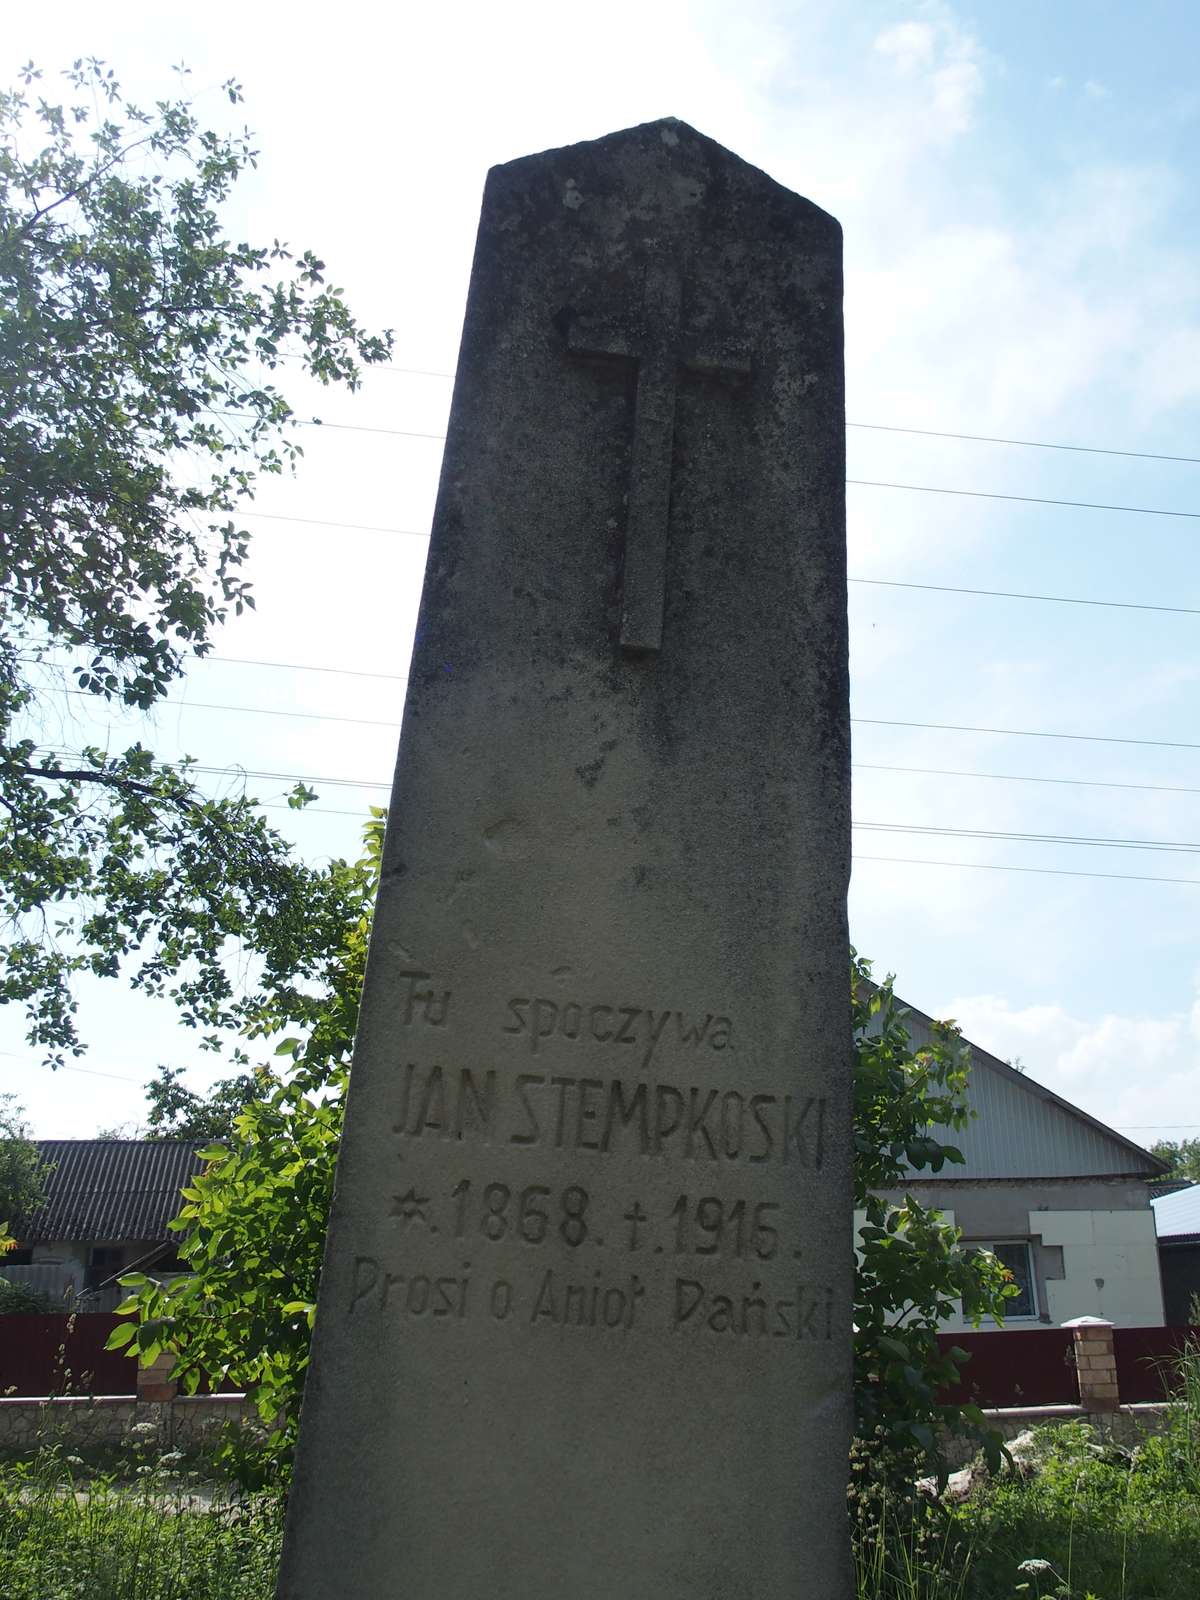 Tombstone of Jan Stempkoski, fragment with inscription, zbaraska cemetery, state before 2018